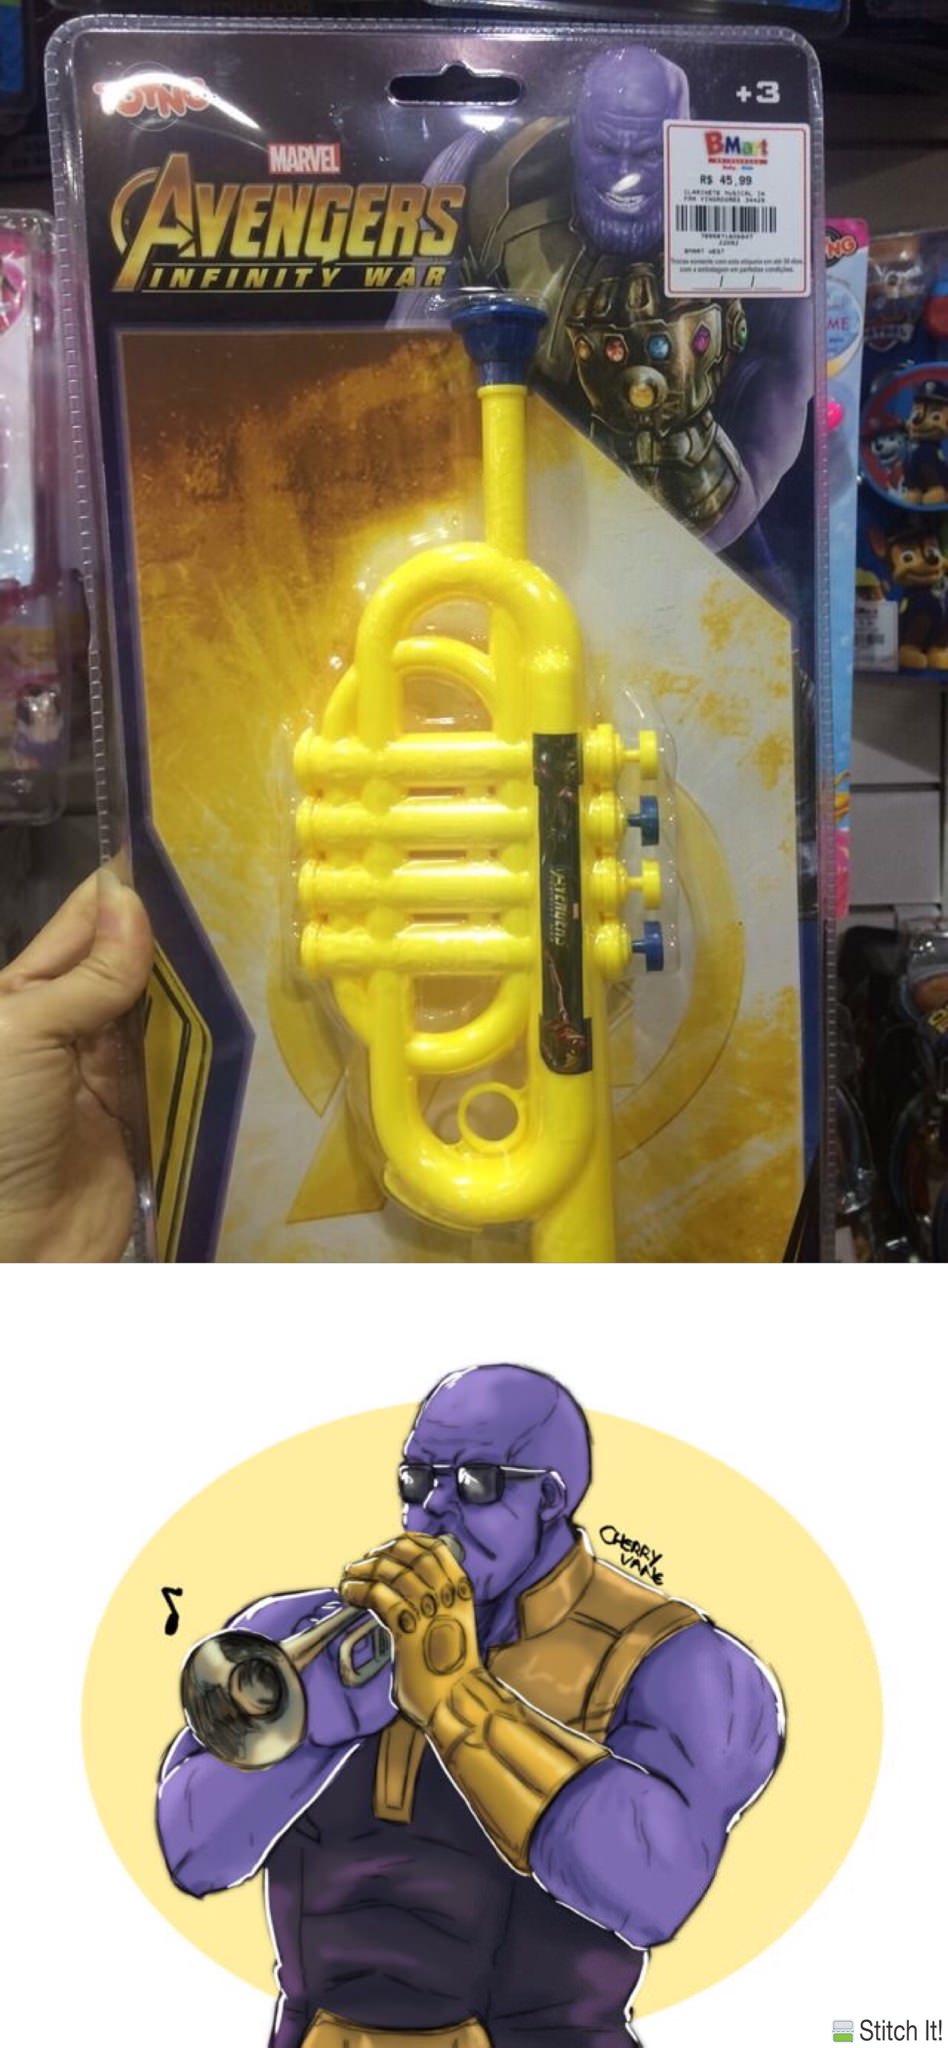 memes - thanos playing trumpet - 3 BMa R$ 45,99 Vengers Infinity Bilalli Stitch It!